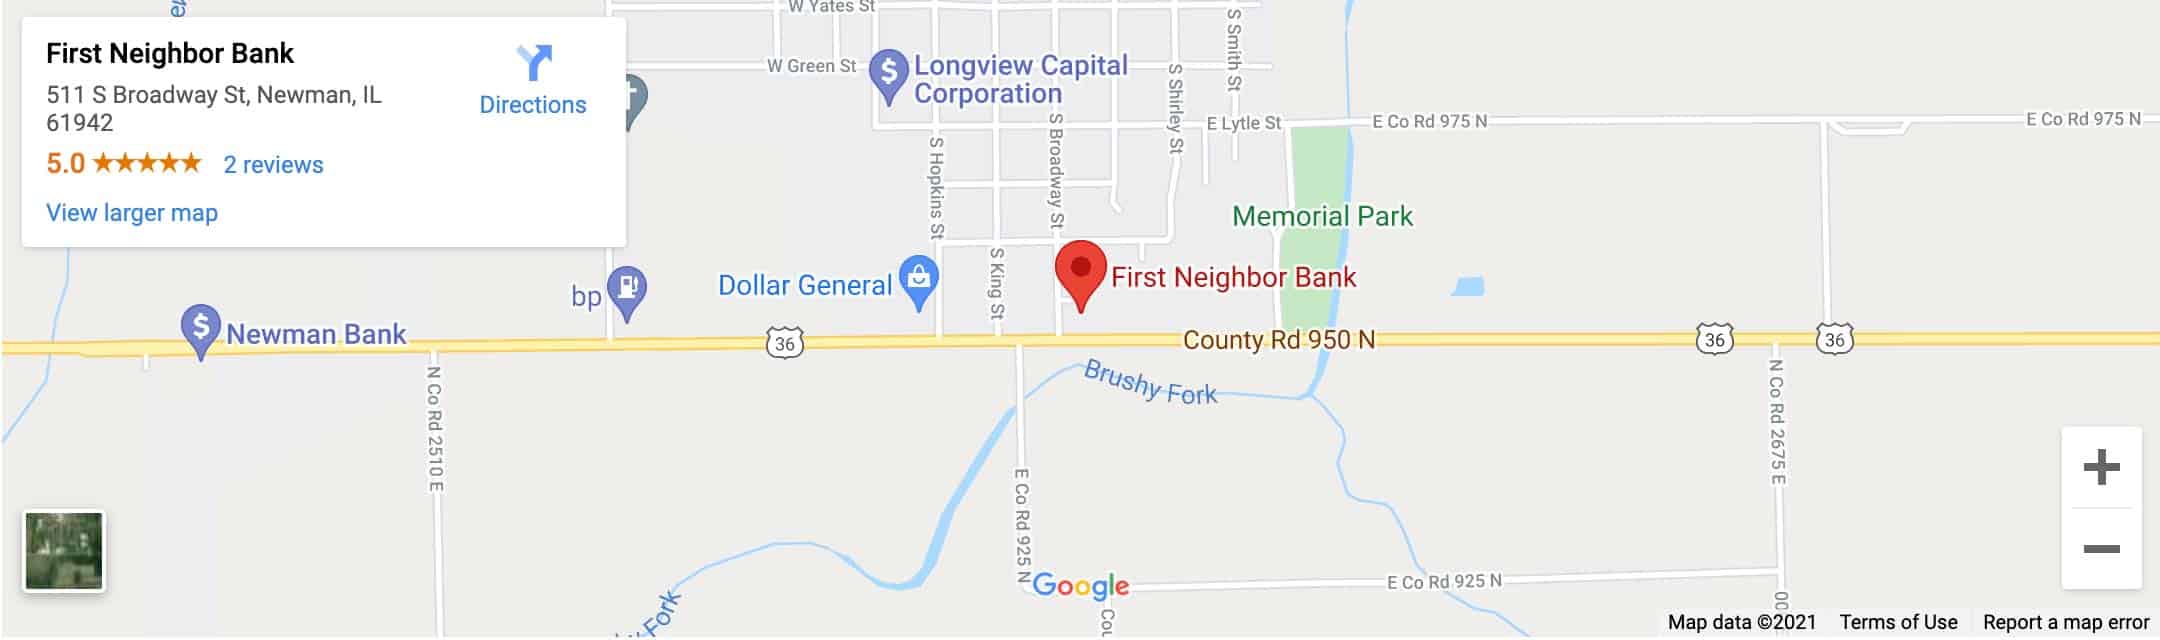 Decorative - First Neighbor Bank Newman Google Map Image